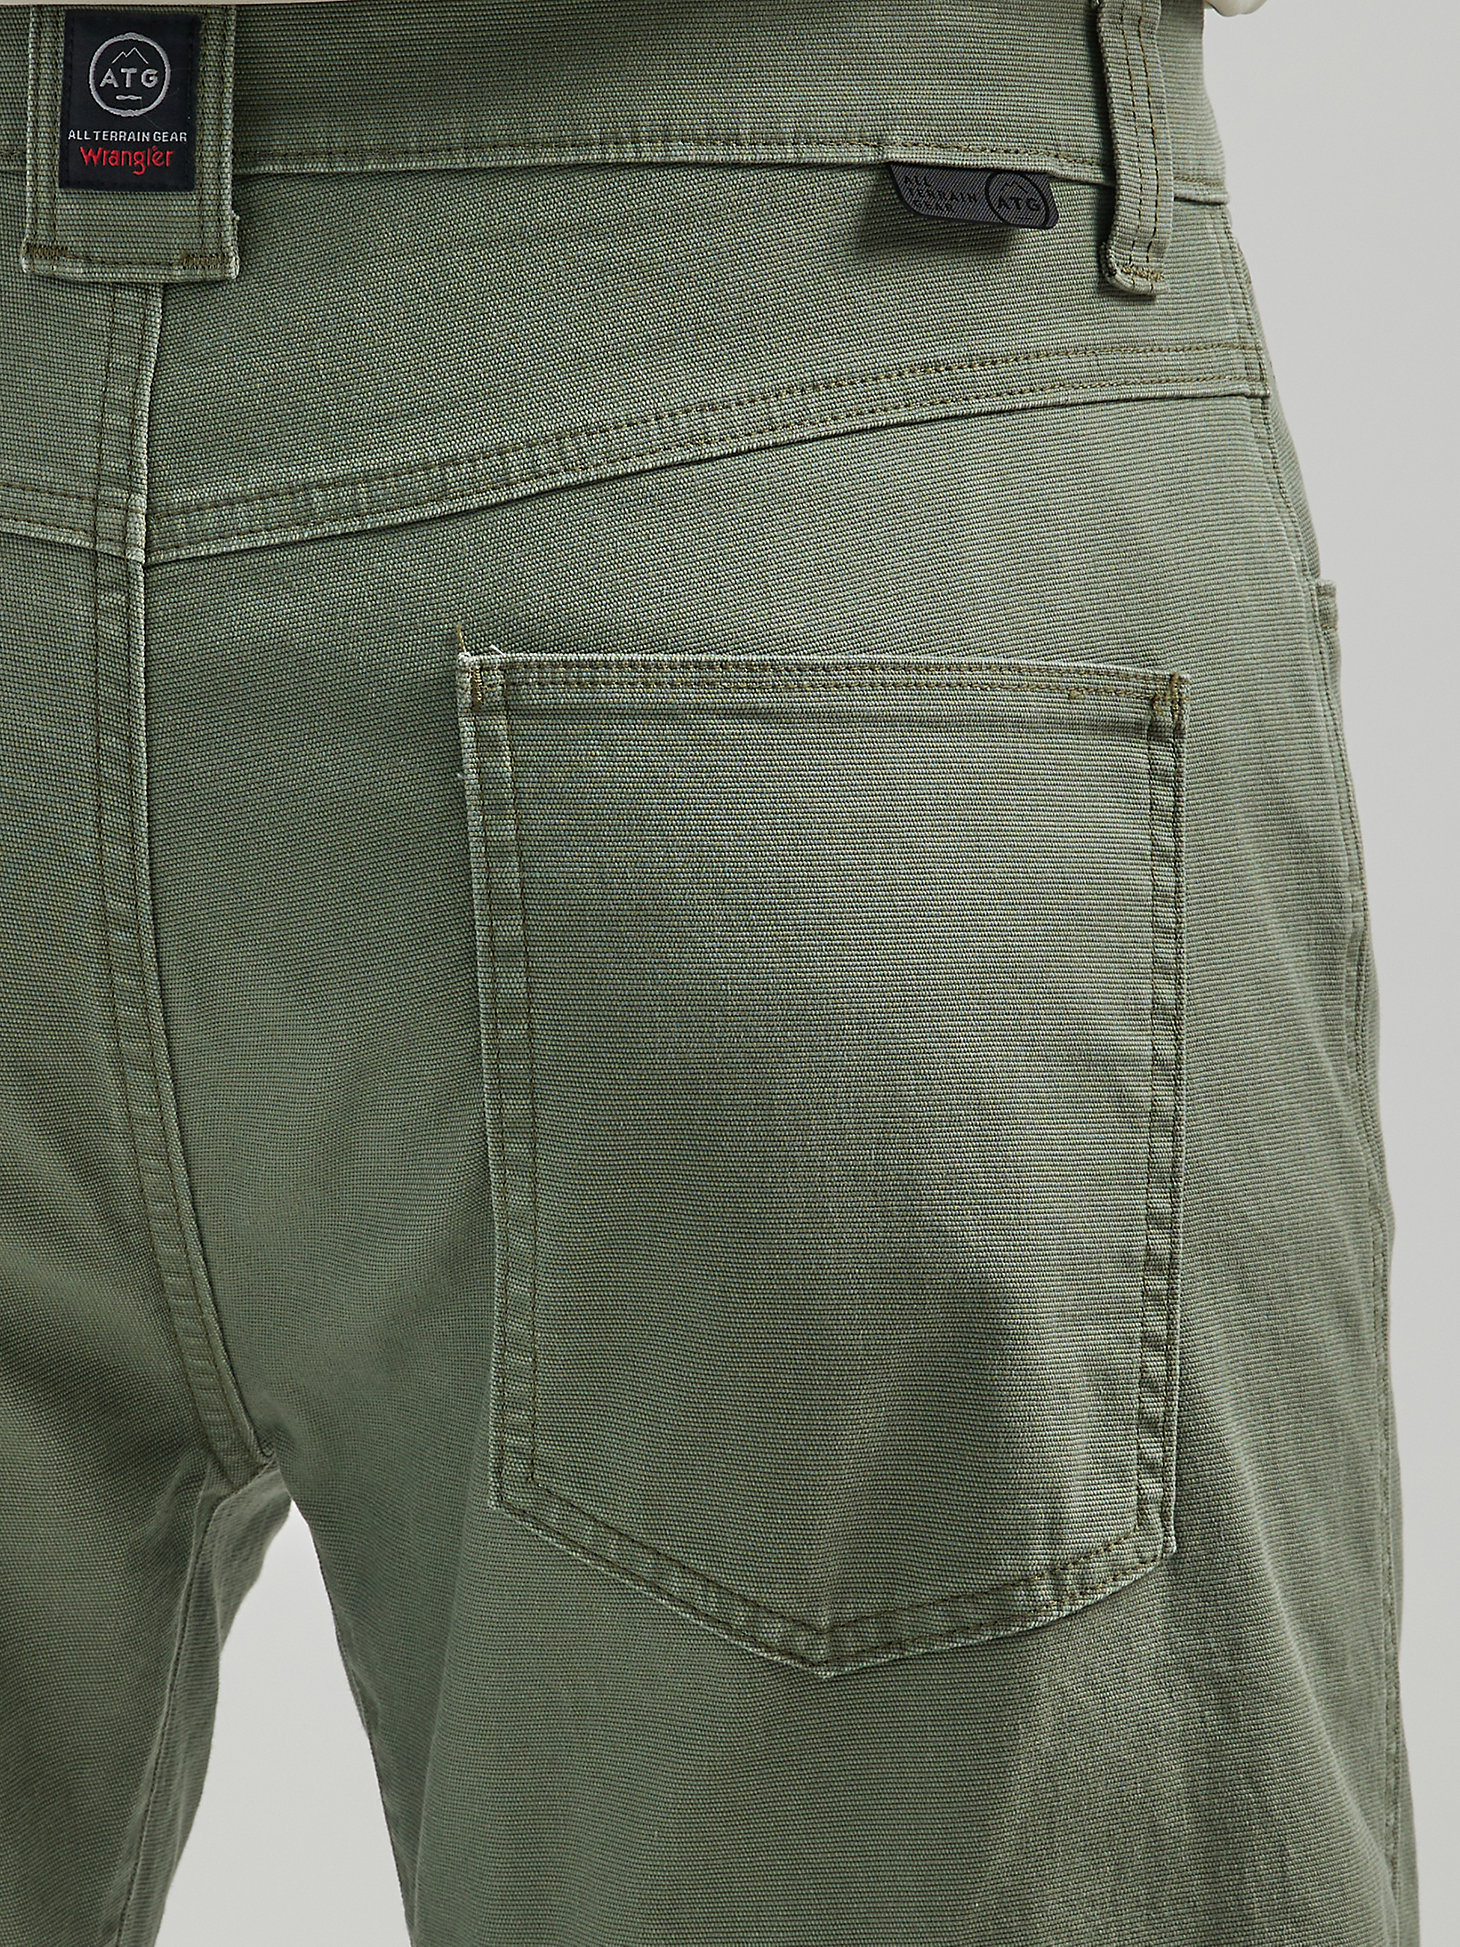 ATG By Wrangler™ Men's Five Pocket Pant in Dusty Olive alternative view 4